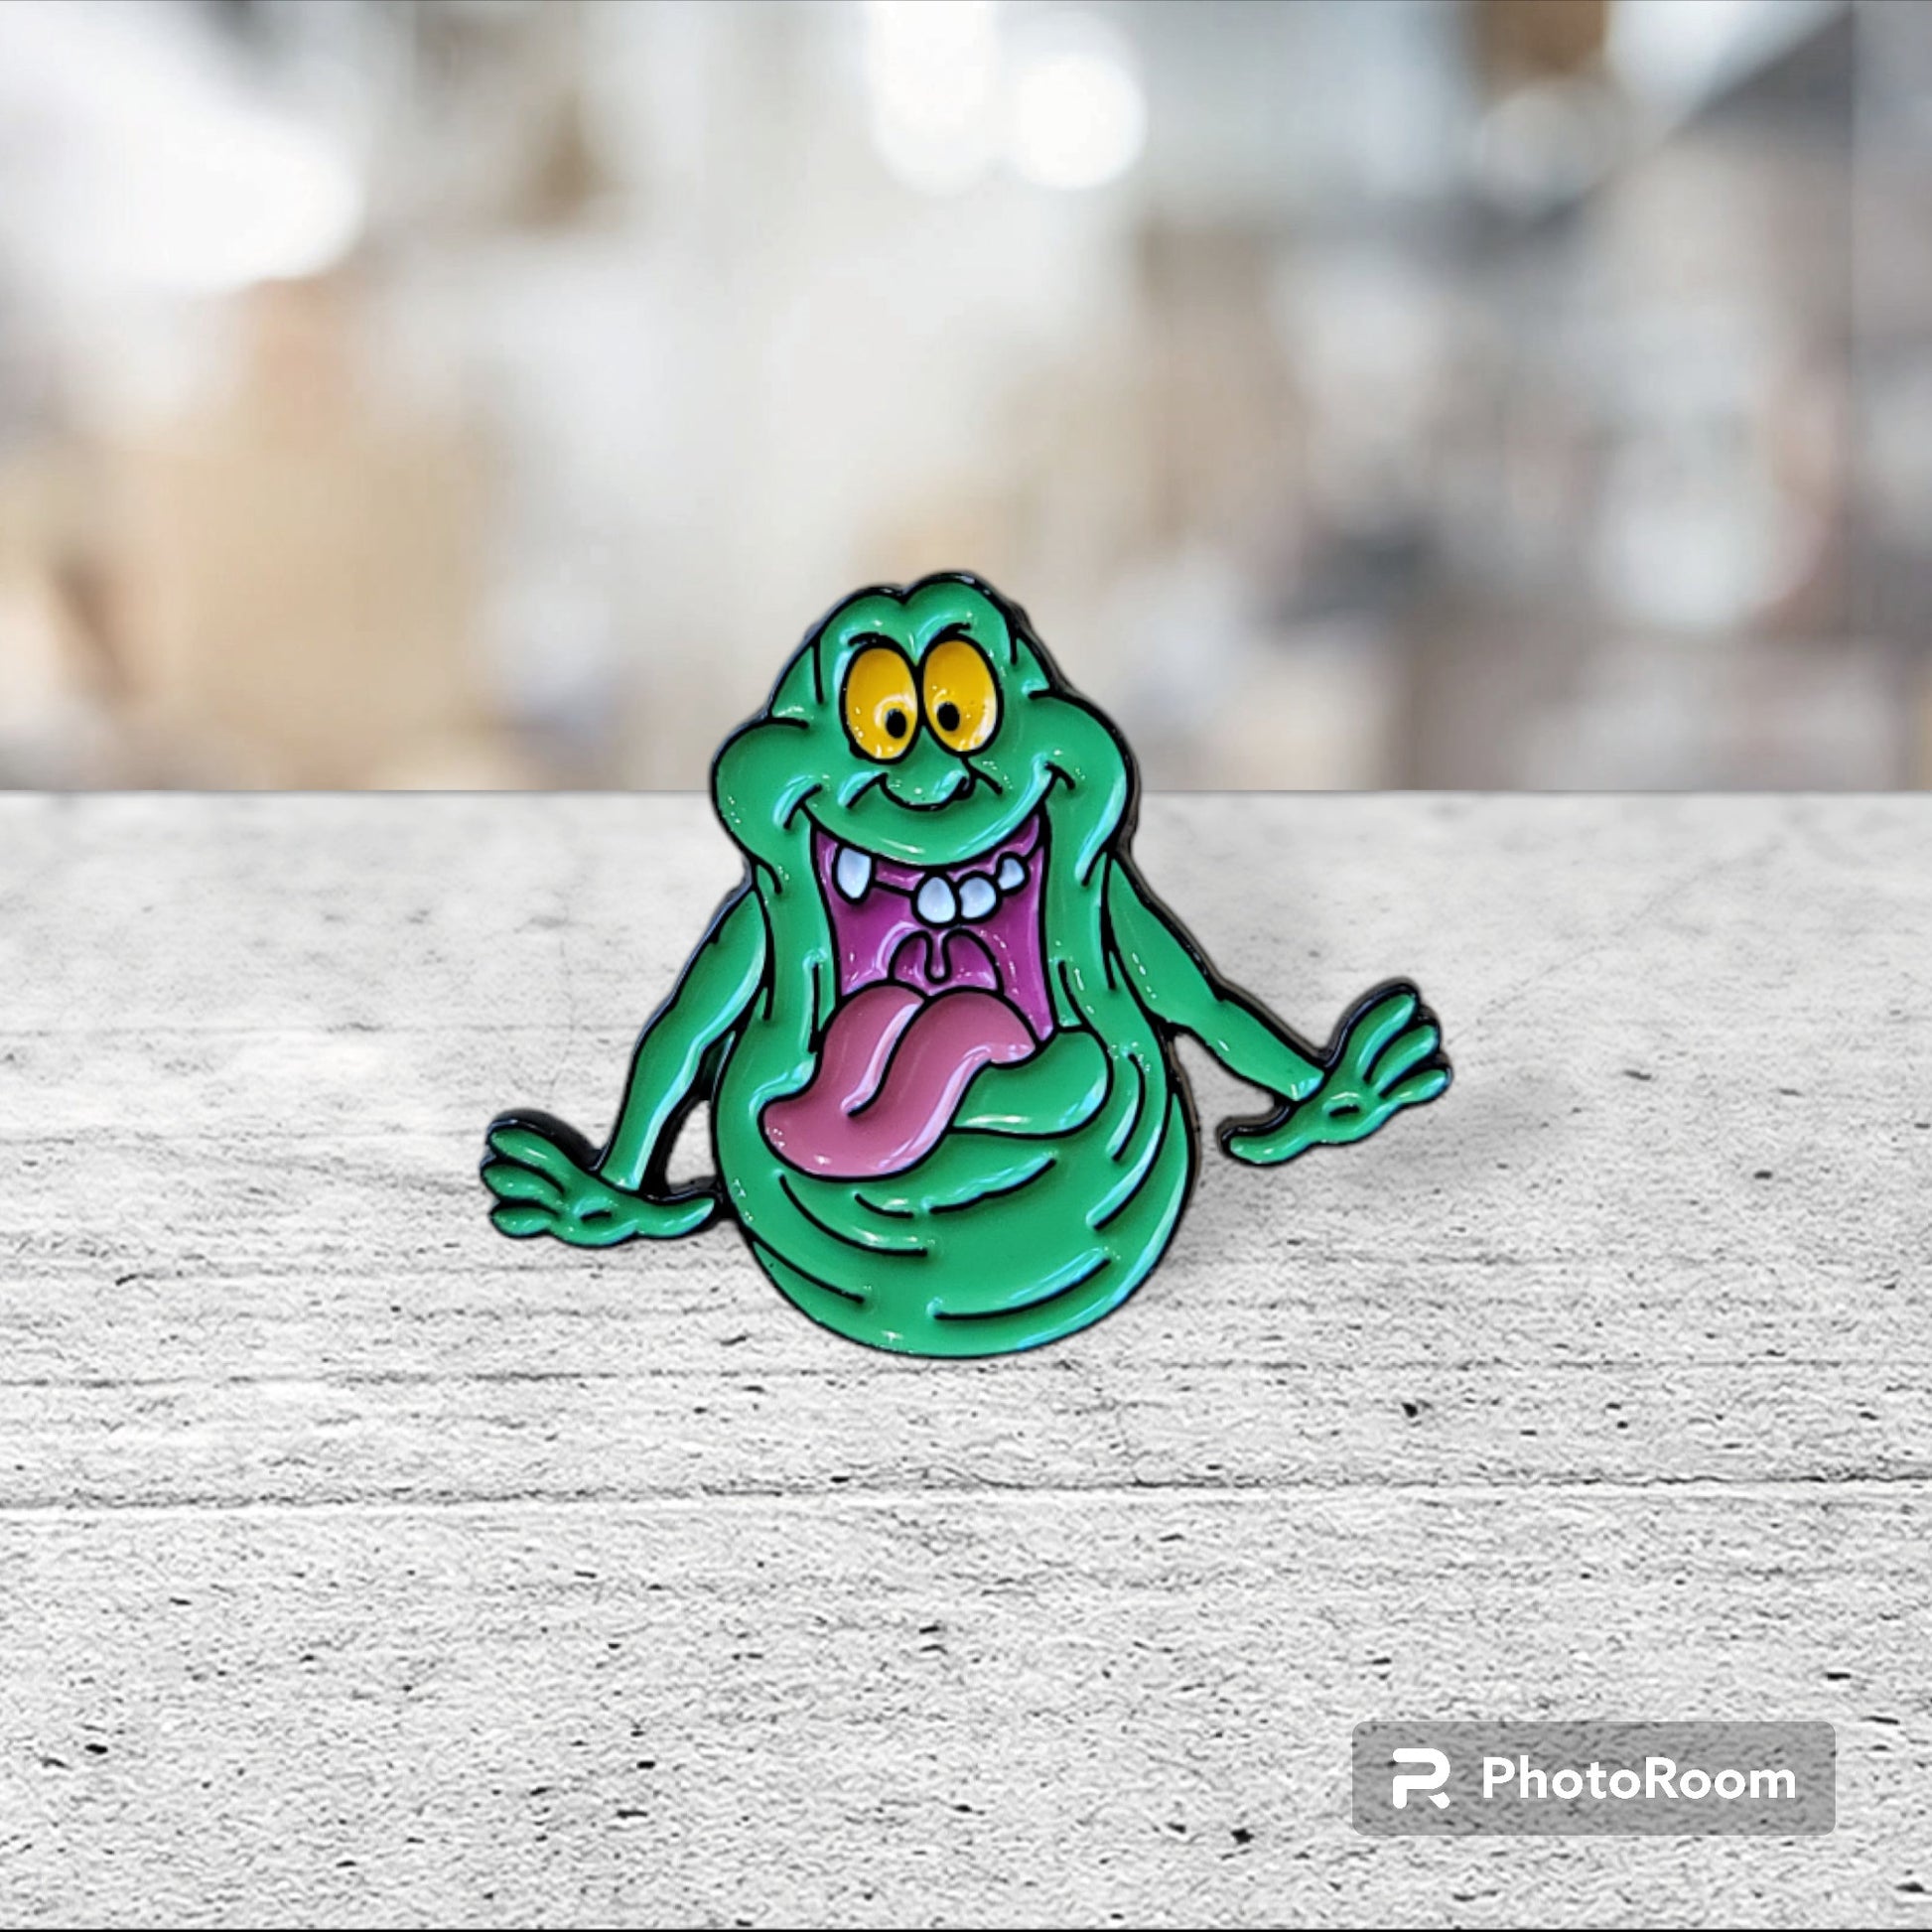 Ghostbusters Inspired Enamel Pin, Slimer Inspired Enamel Pin